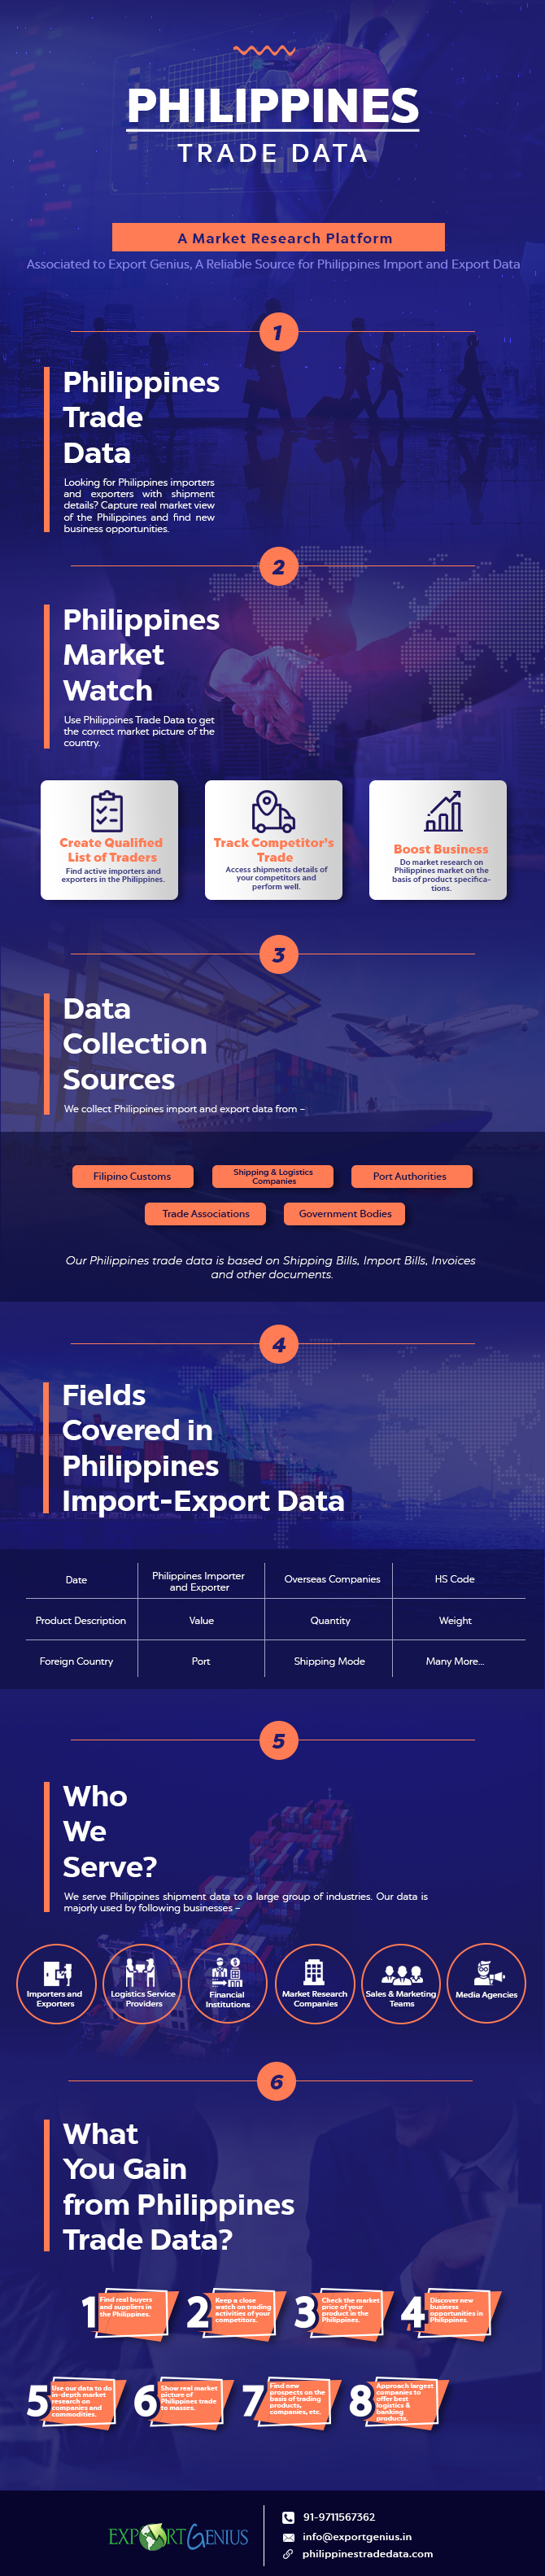 Trading platform philippines